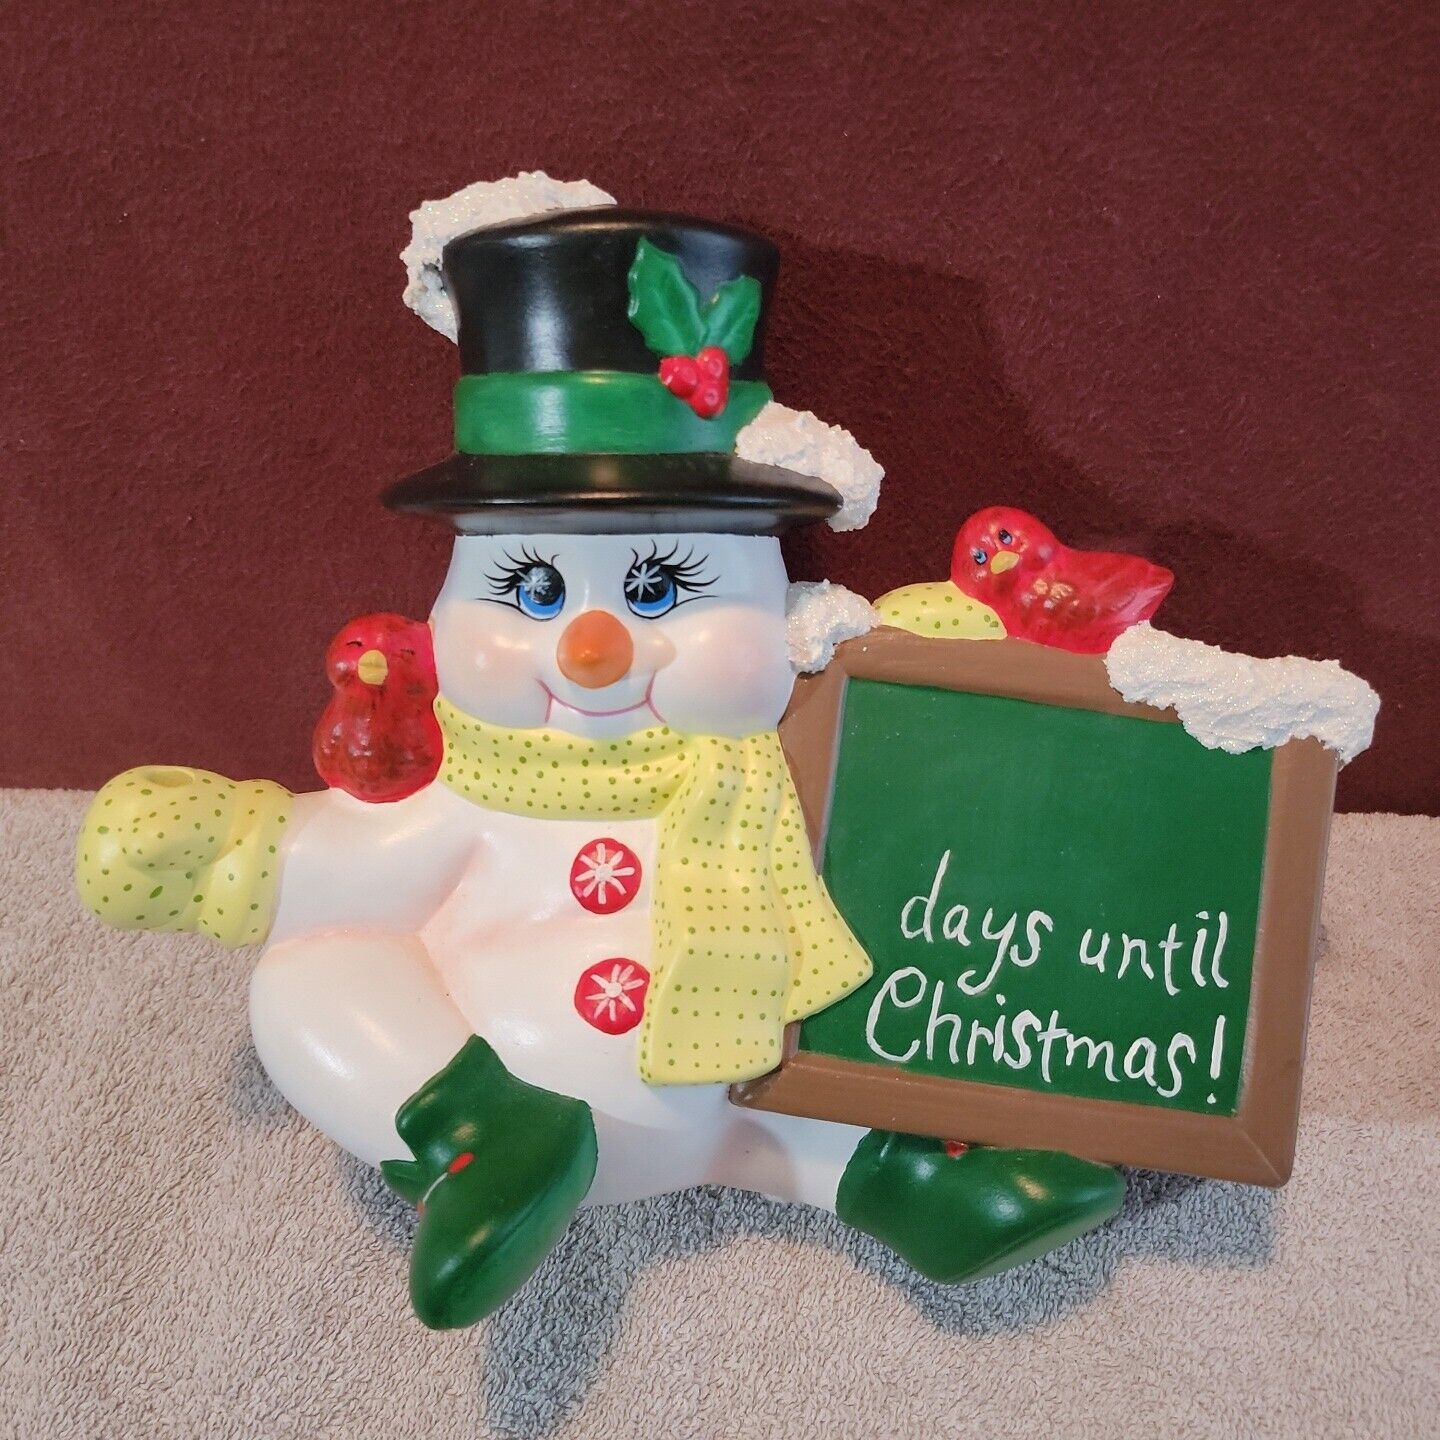 Vtg Hand Painted Ceramic Snowman Days until Christmas Count Chalkboard Figurine